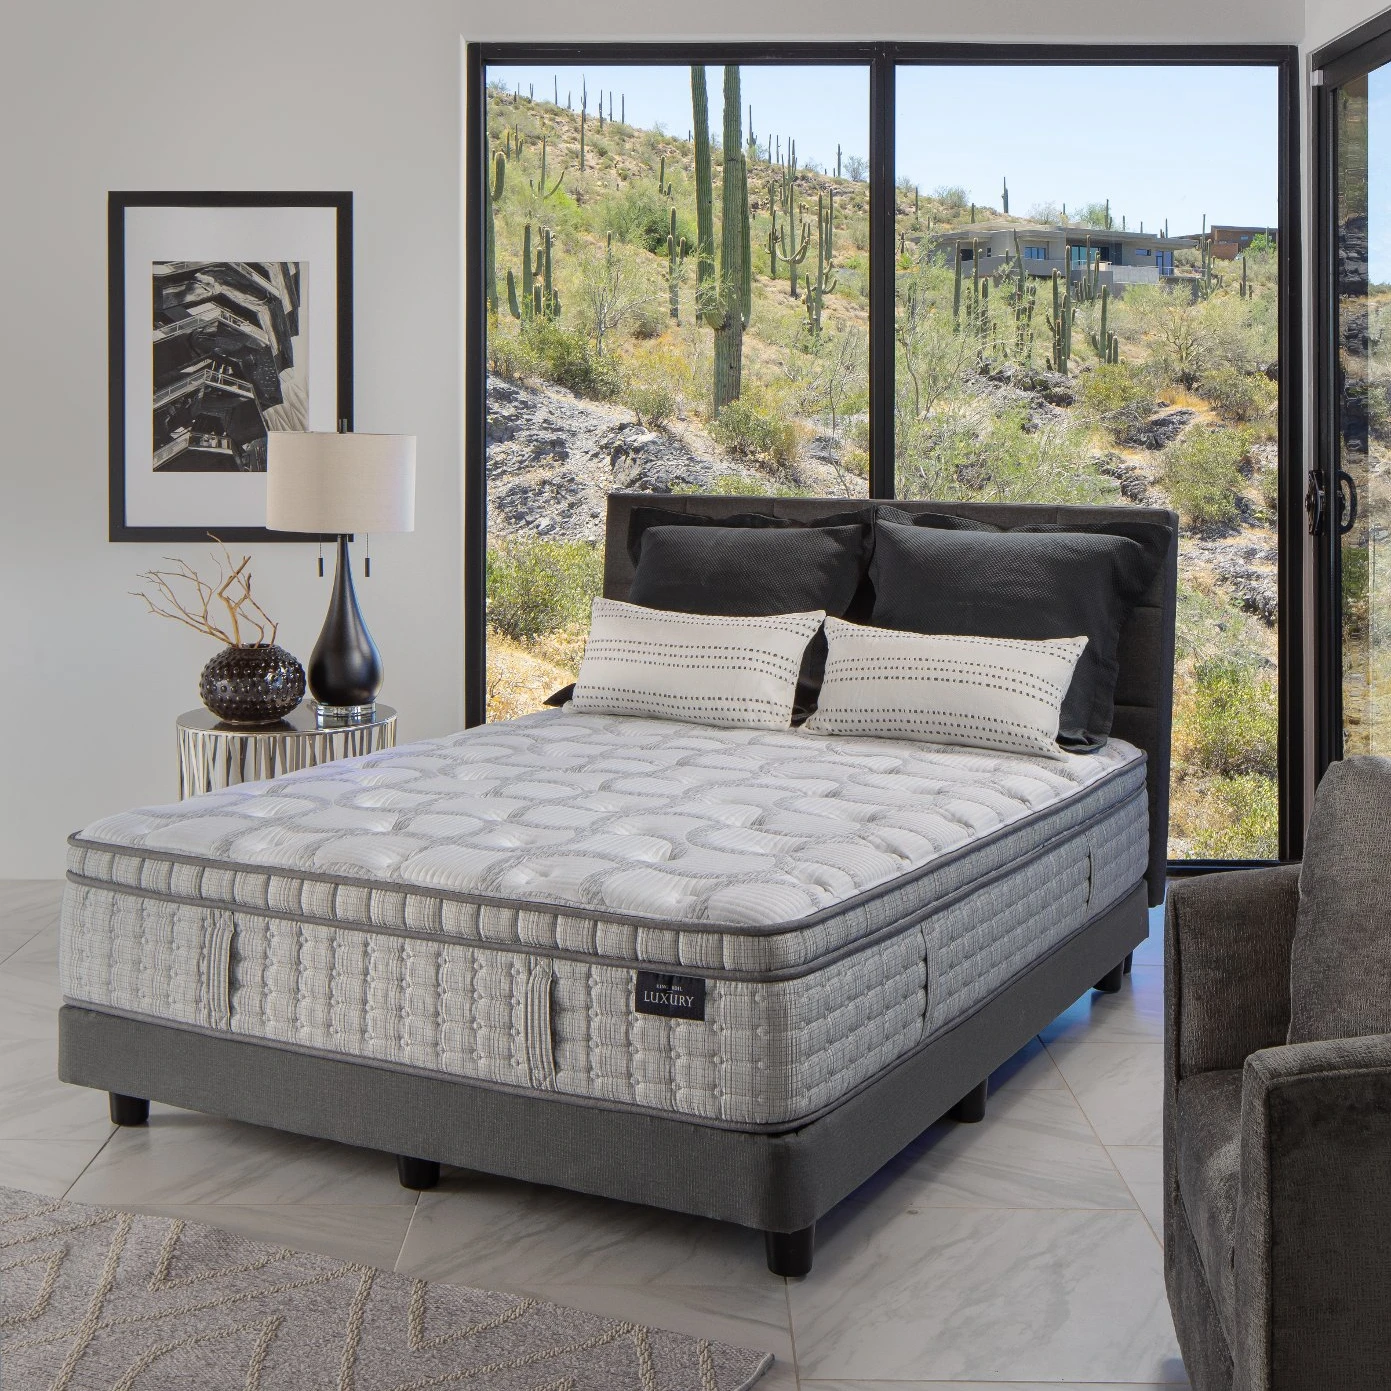 Hot selling Natural Latex foam pocket spring mattress Home bedroom furniture Queen Coir Mattress